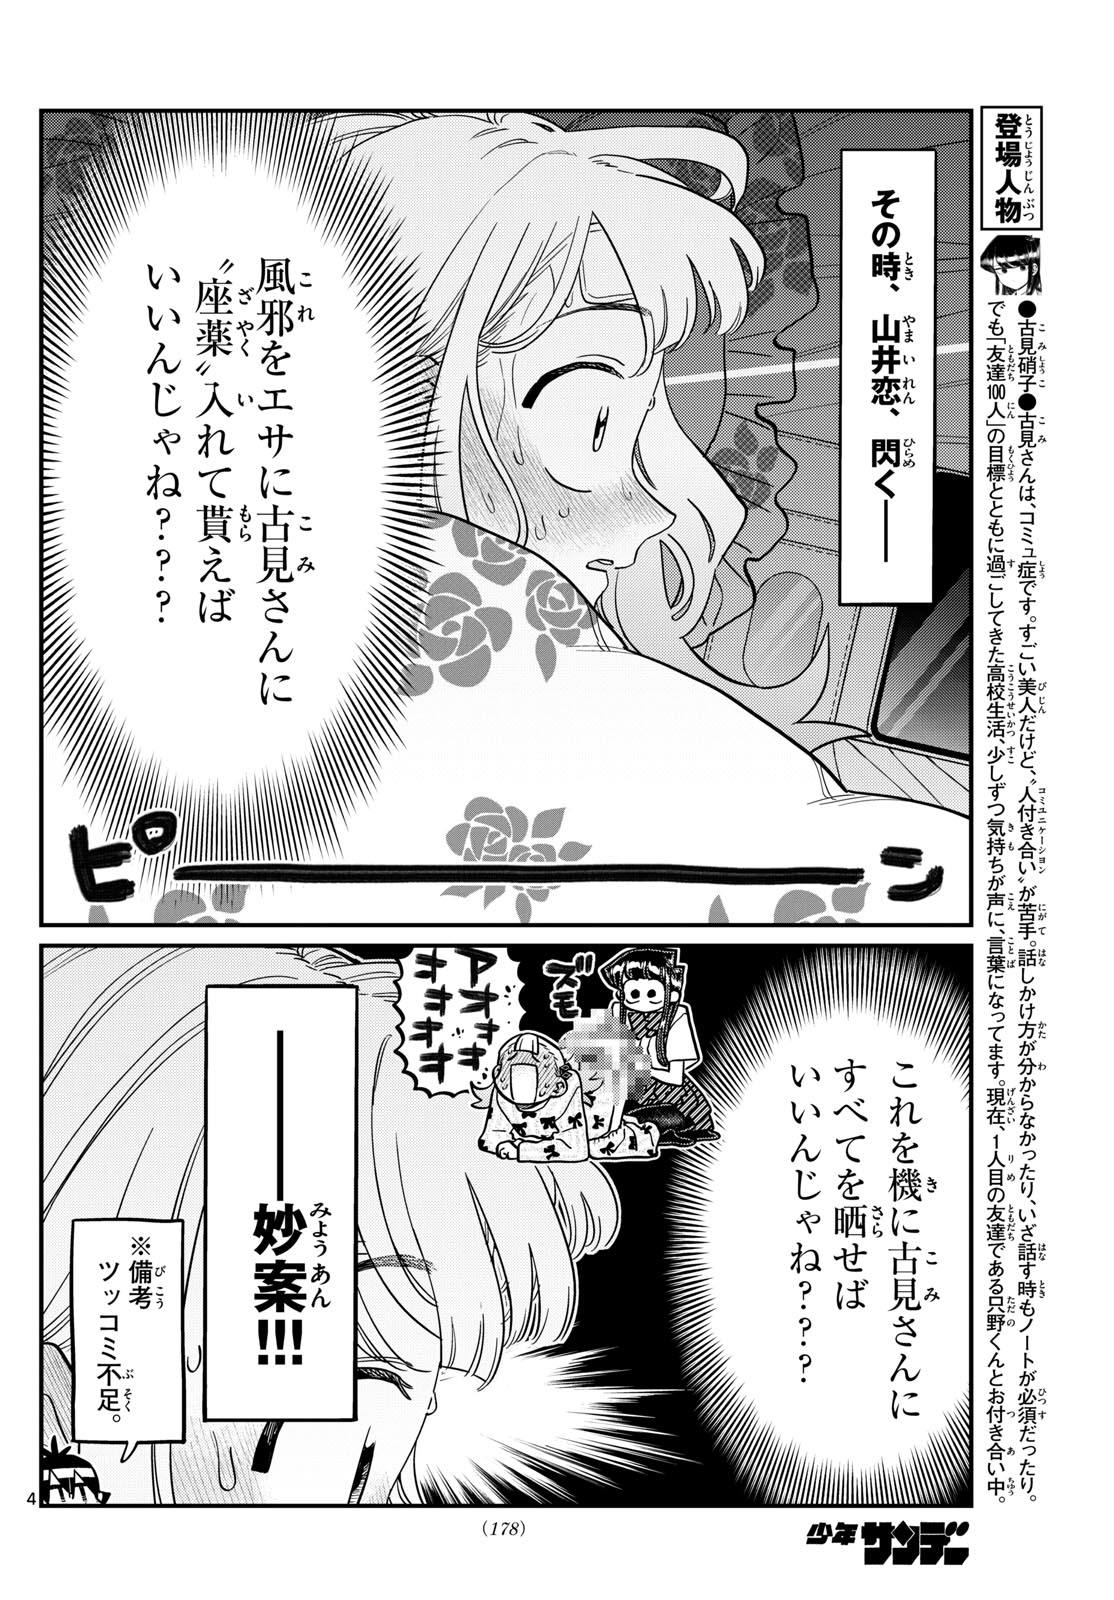 Read Komi-San Wa Komyushou Desu Chapter 419 on Mangakakalot